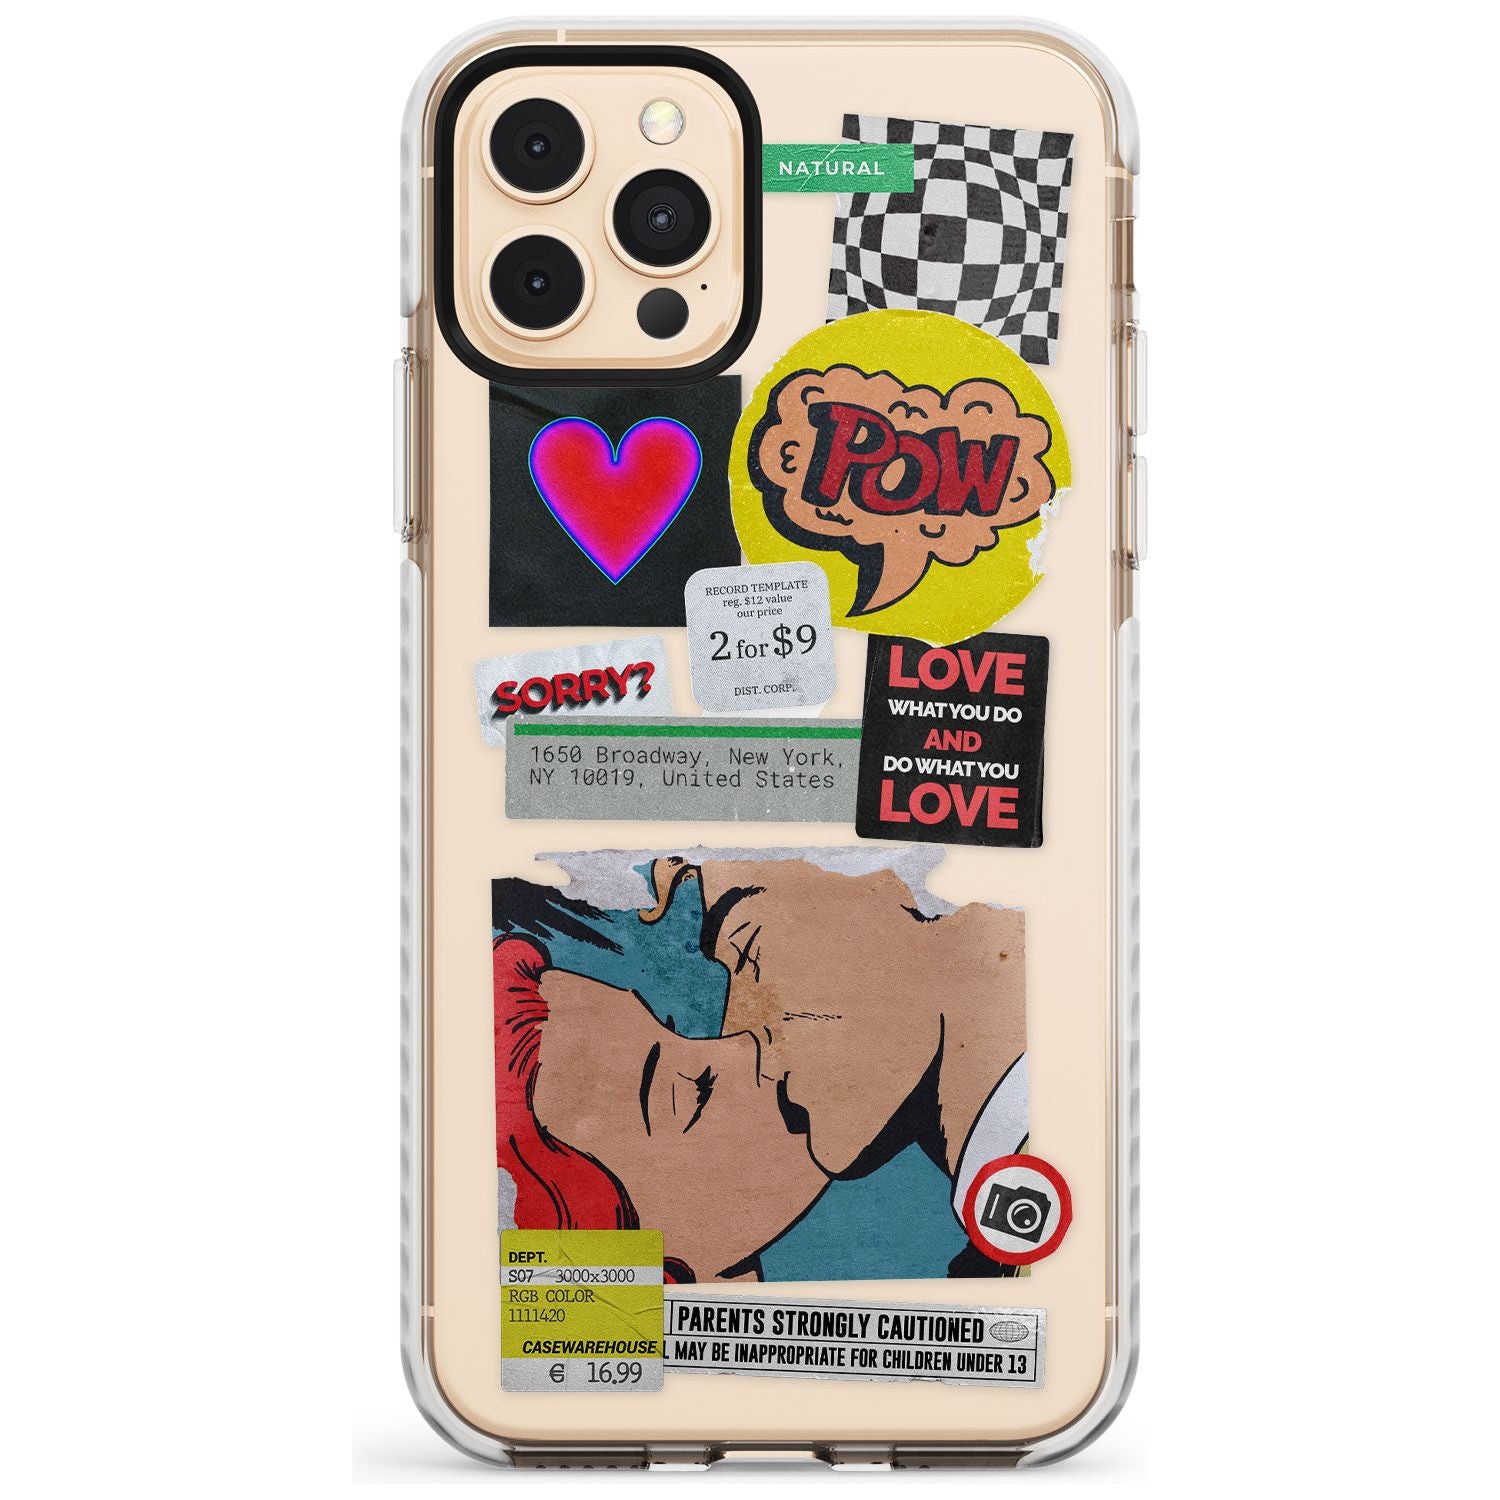 Retro Sticker Mix Slim TPU Phone Case for iPhone 11 Pro Max